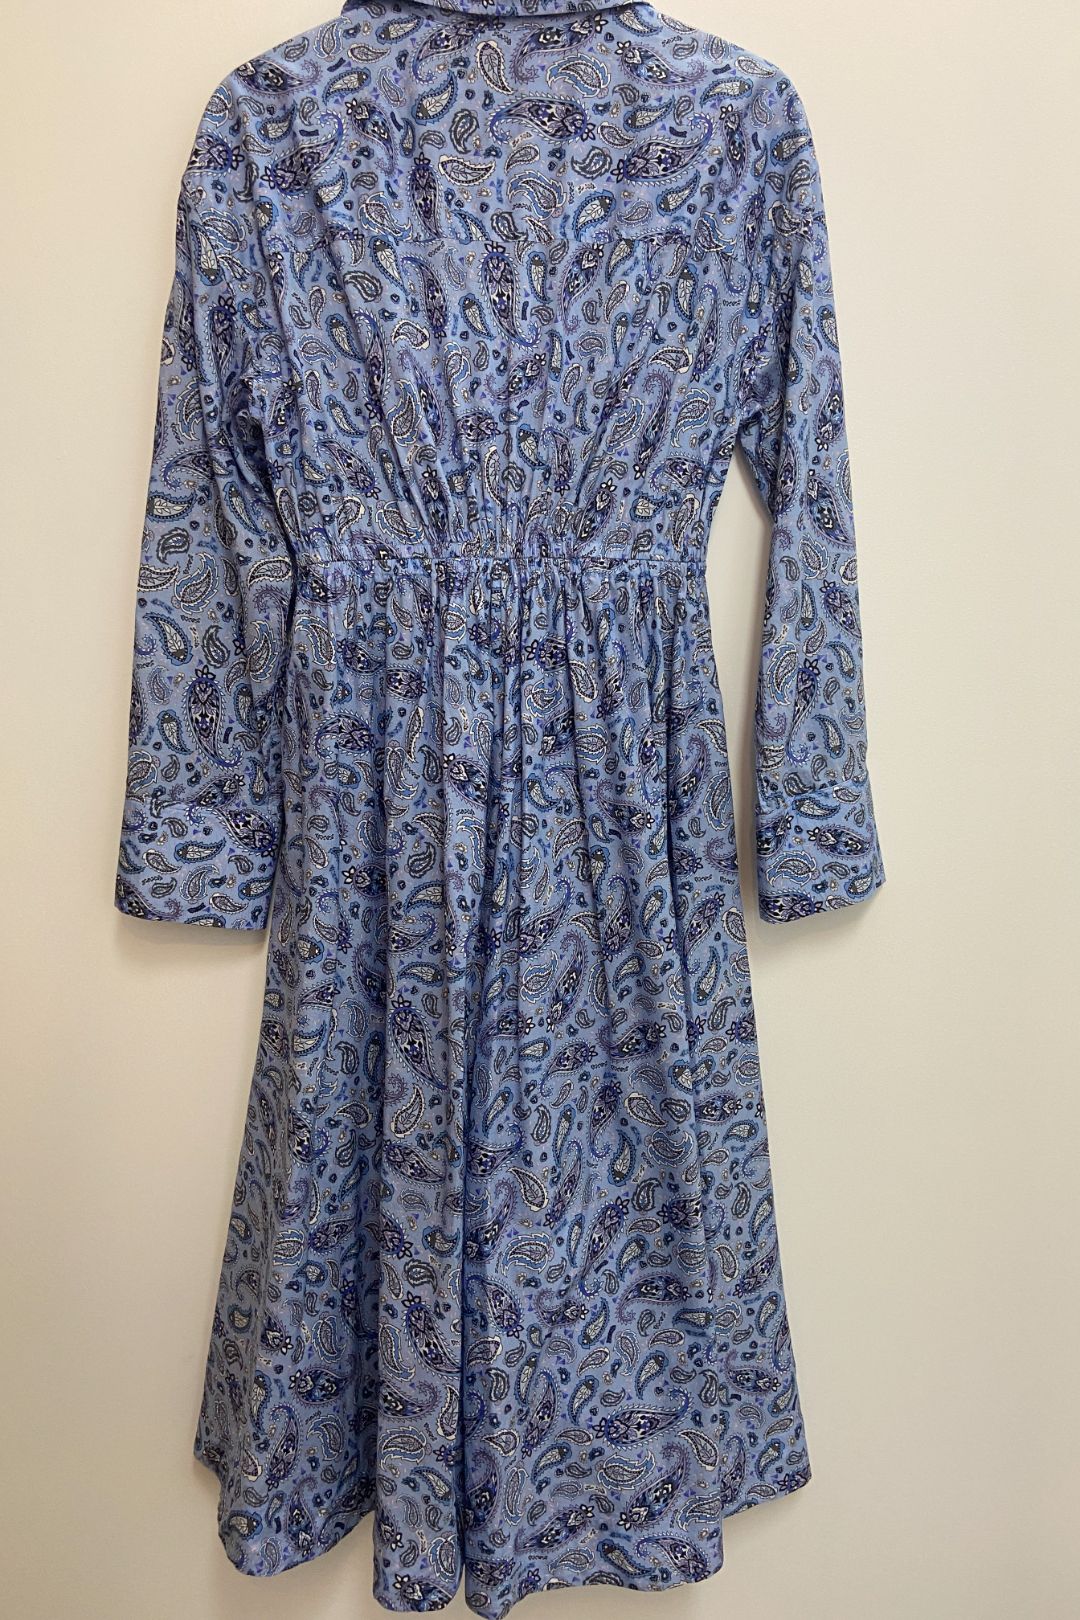 Scanlan Theodore Wo Paisley Print Cotton Midi Dress in Blue